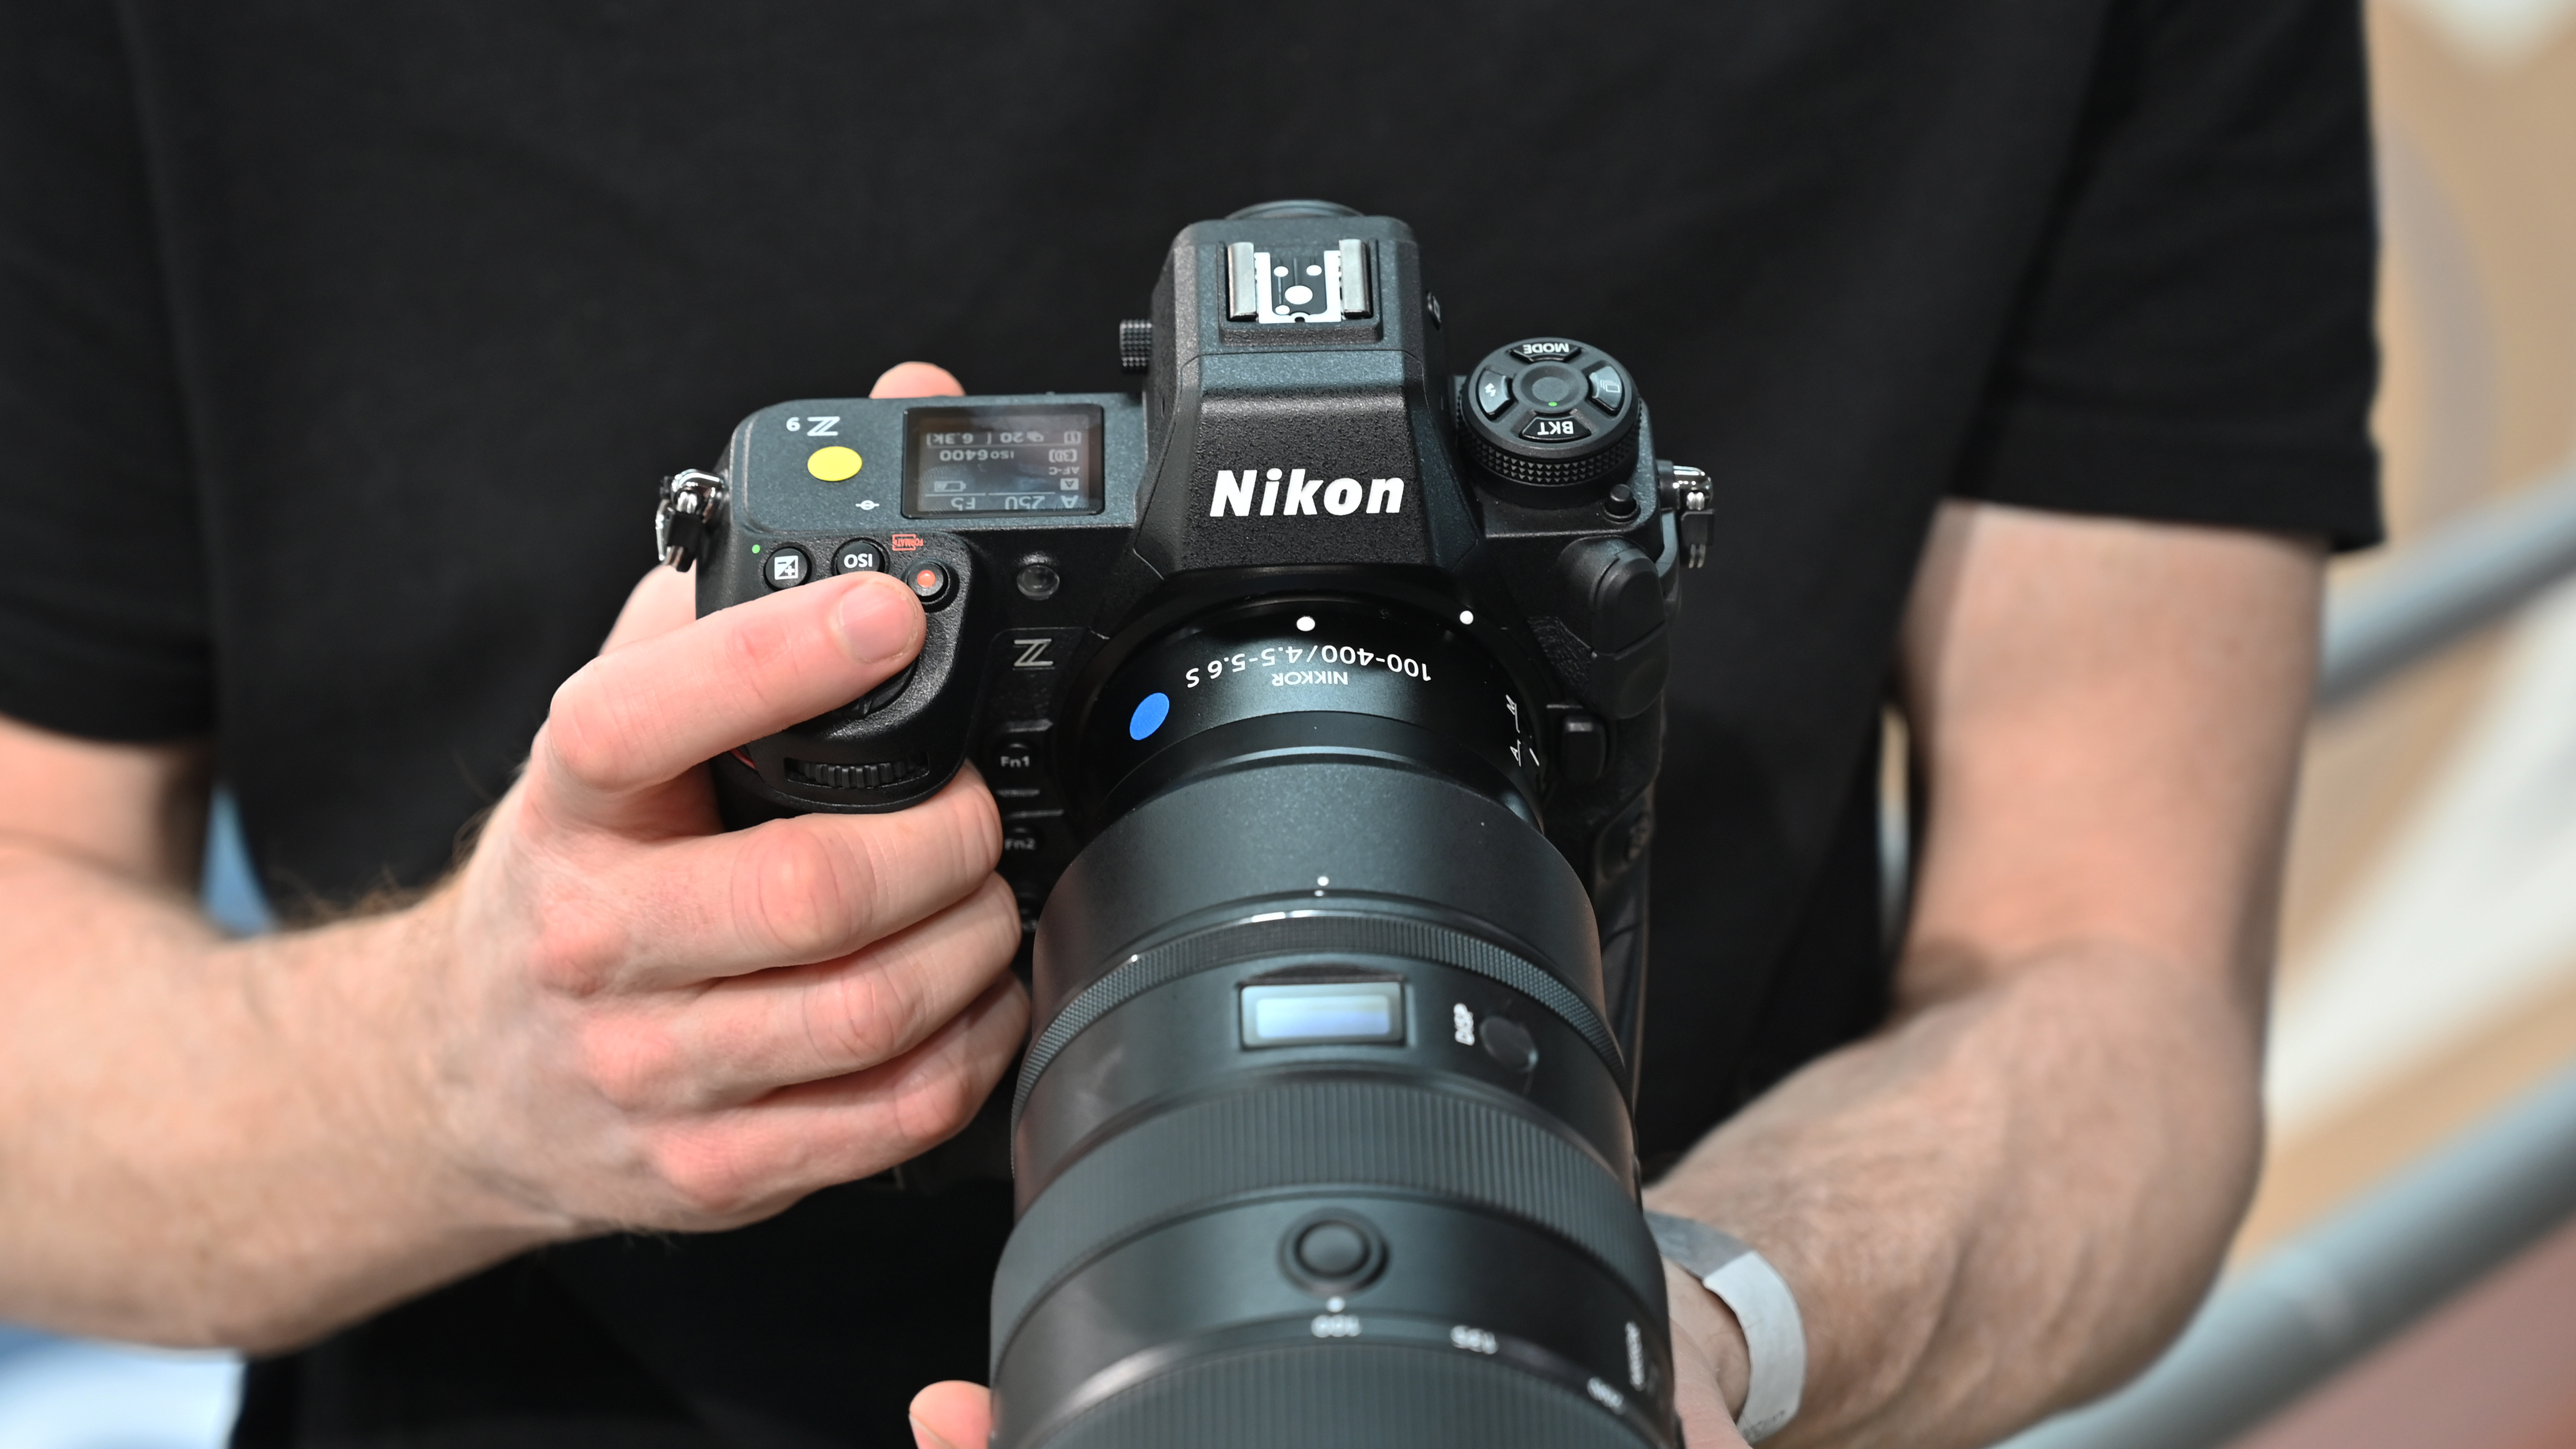 Hands holding the Nikon Z9 mirrorless camera